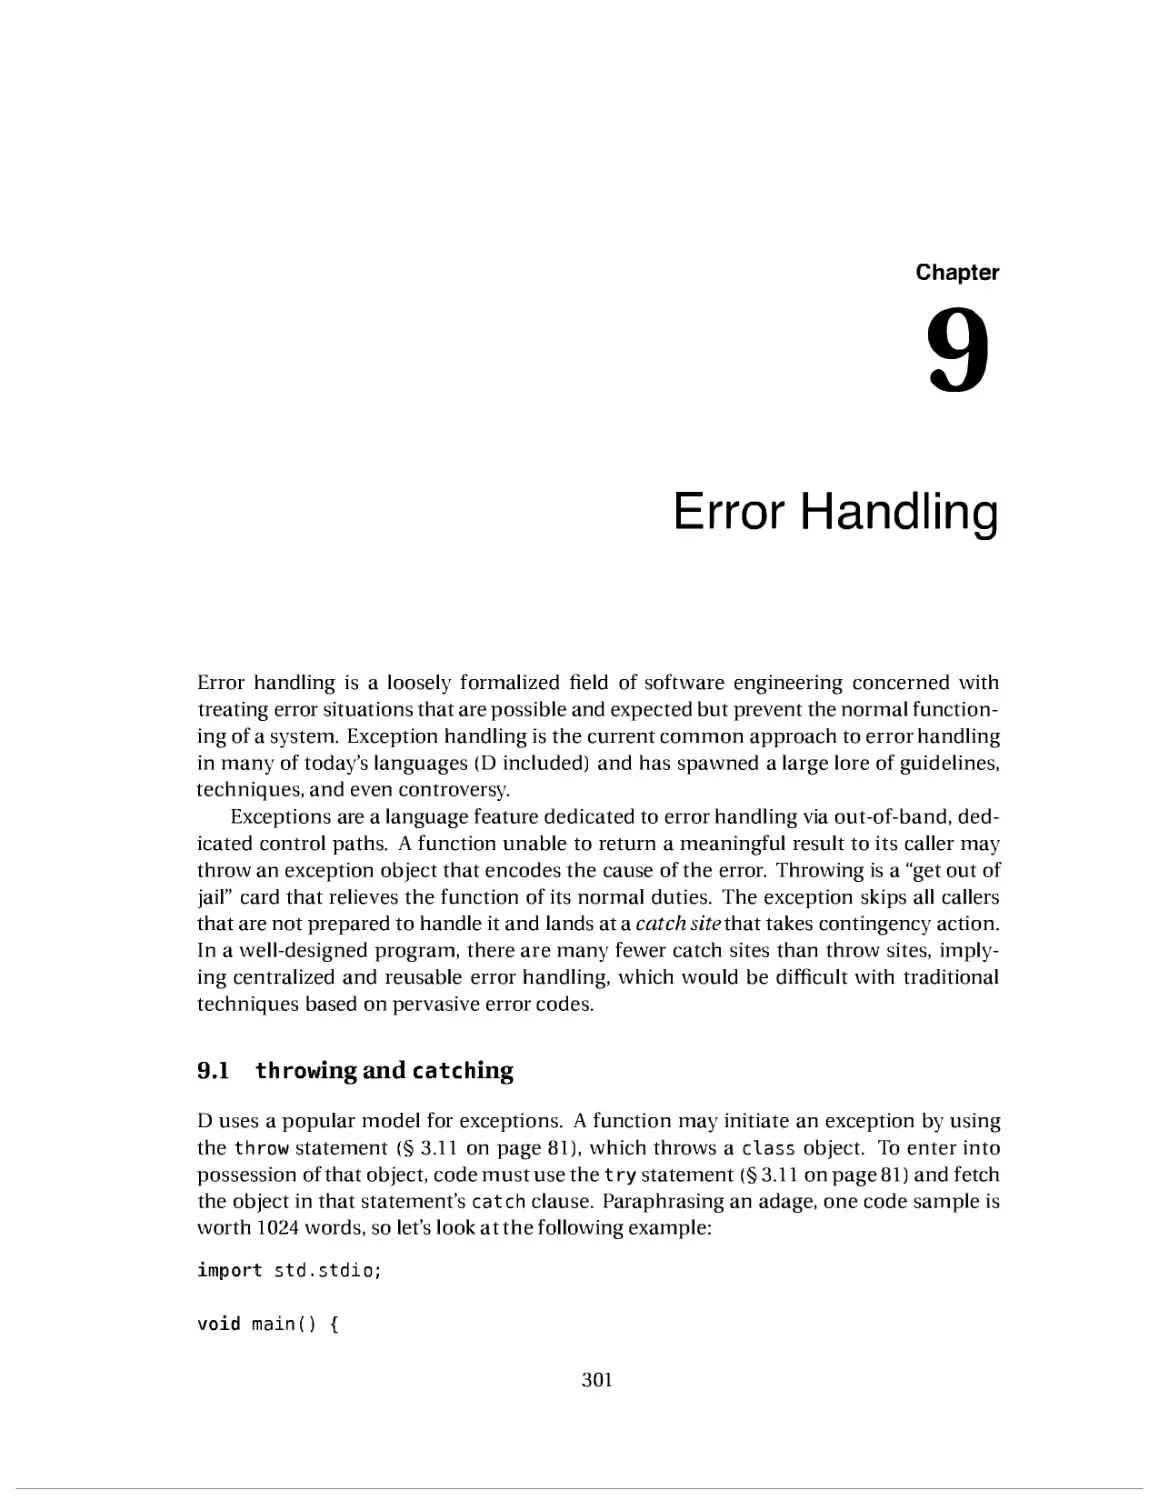 9. Error Handling